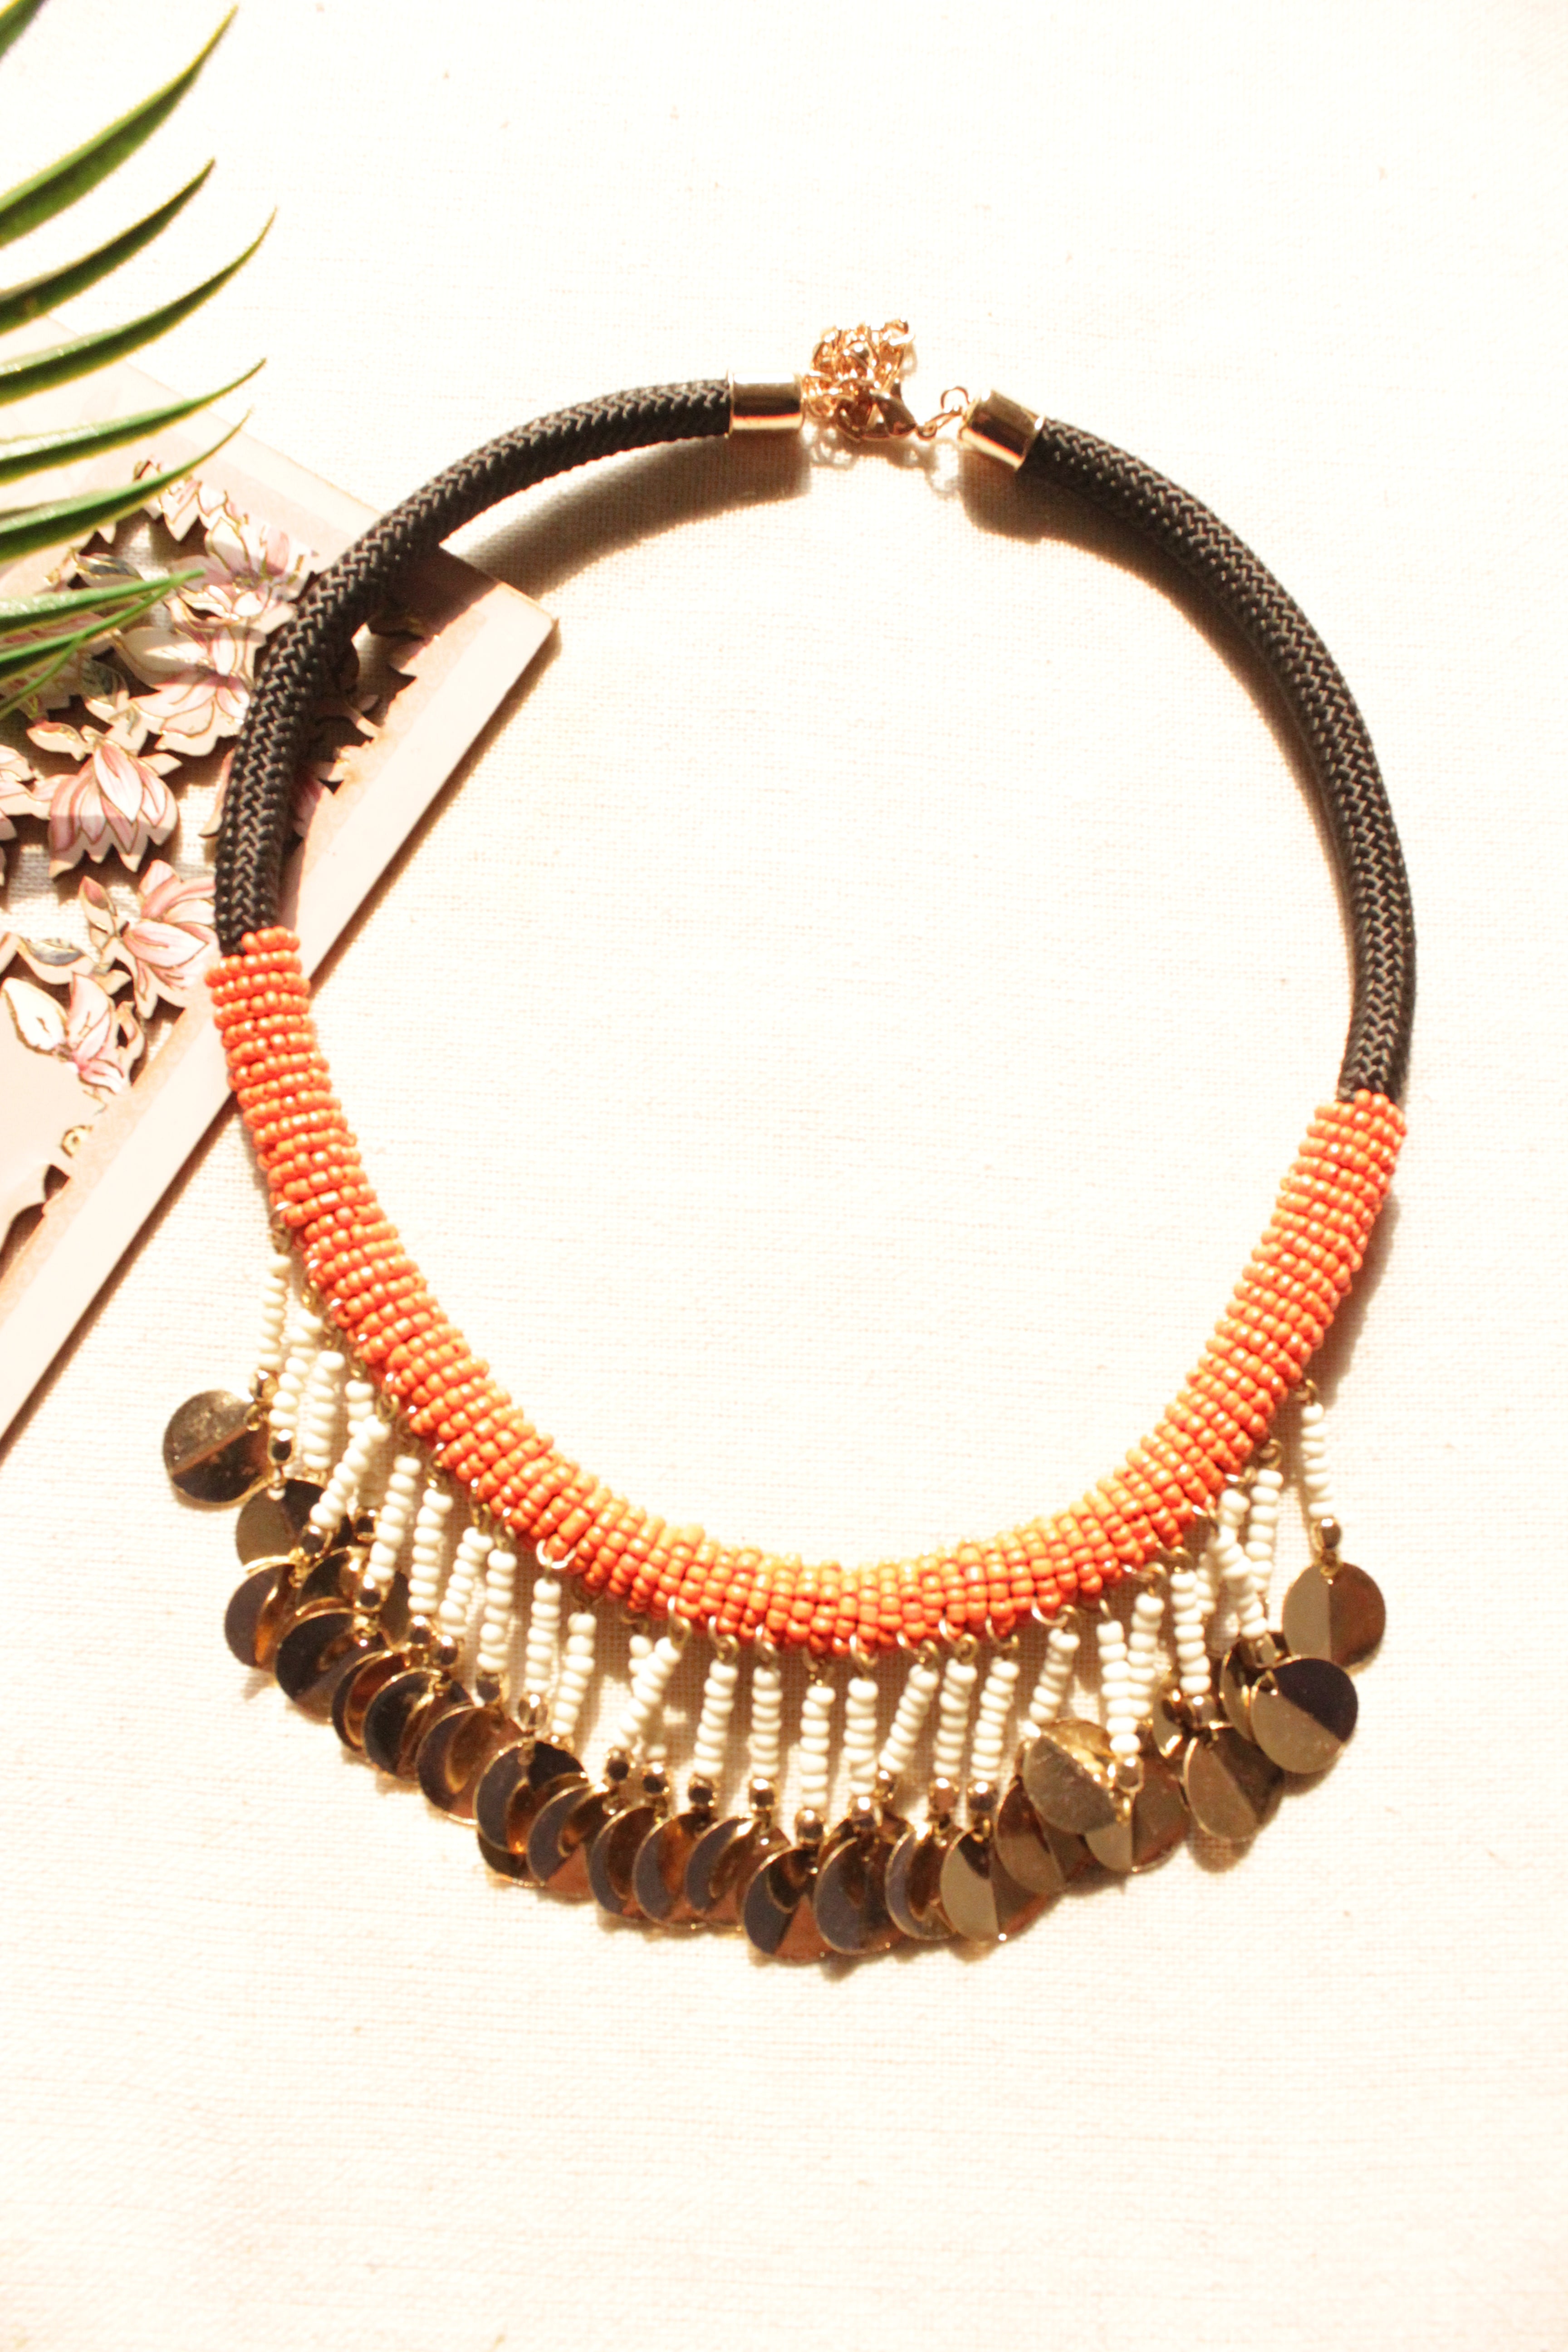 Braided Fabric Threads, Beads and Circular Metal Charms Handmade Boho Necklace